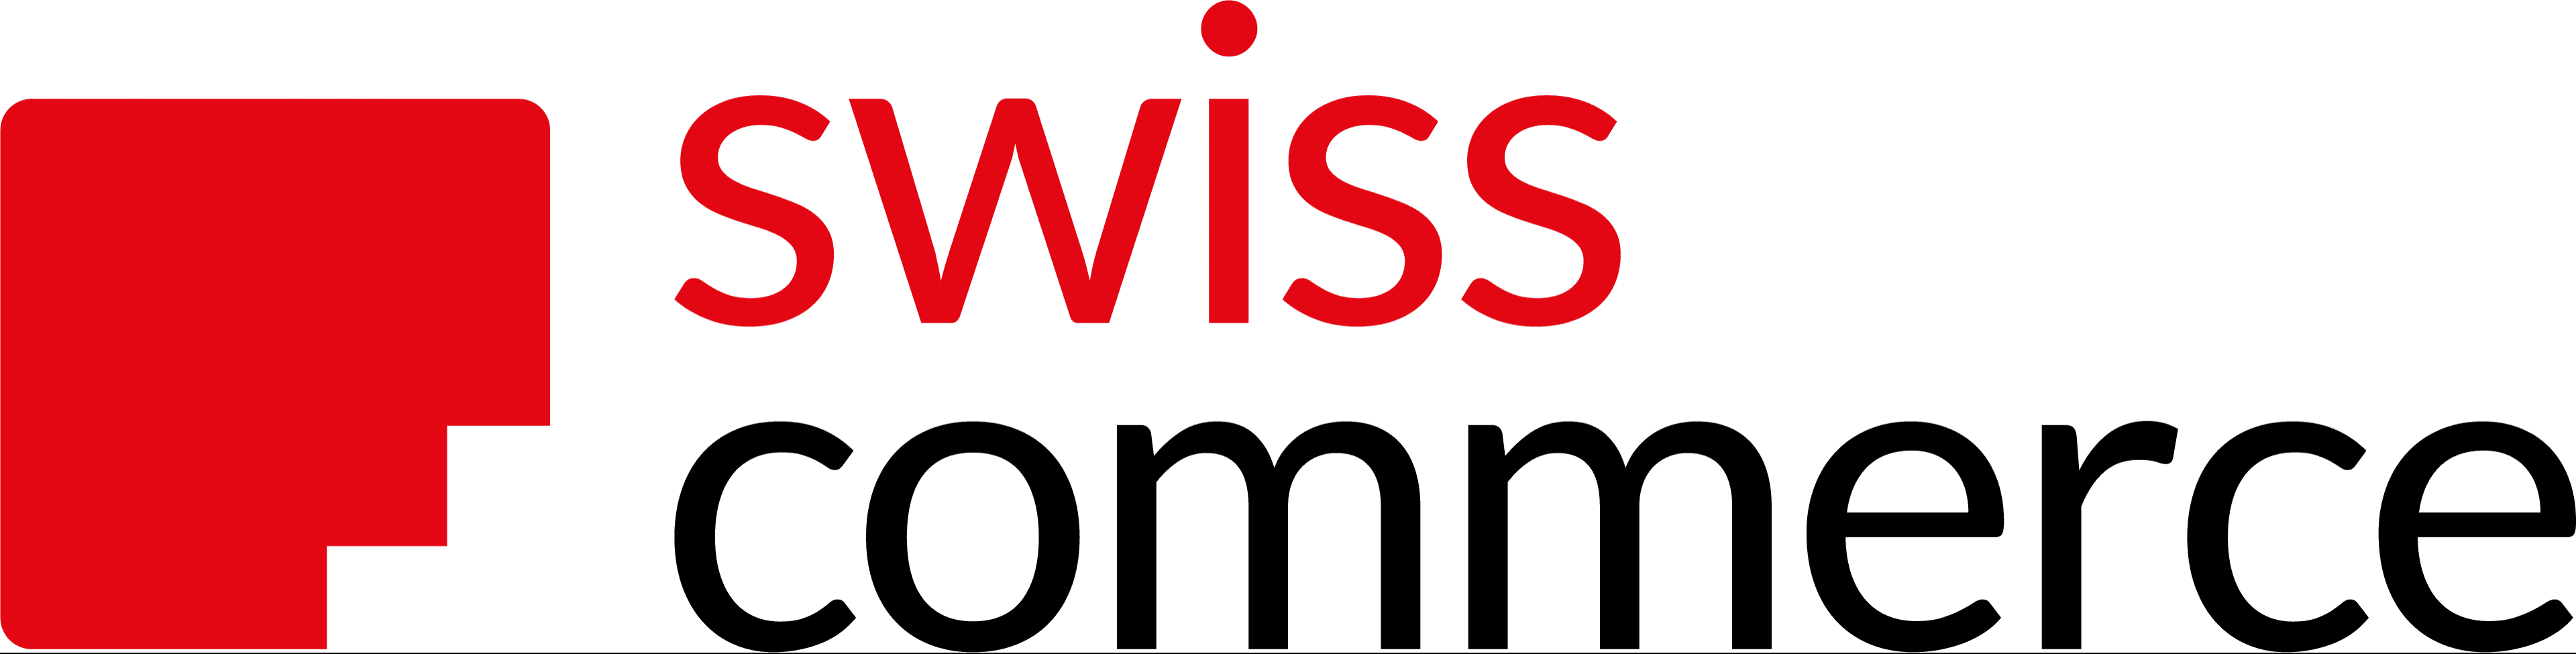 SwissCommerce Management GmbH